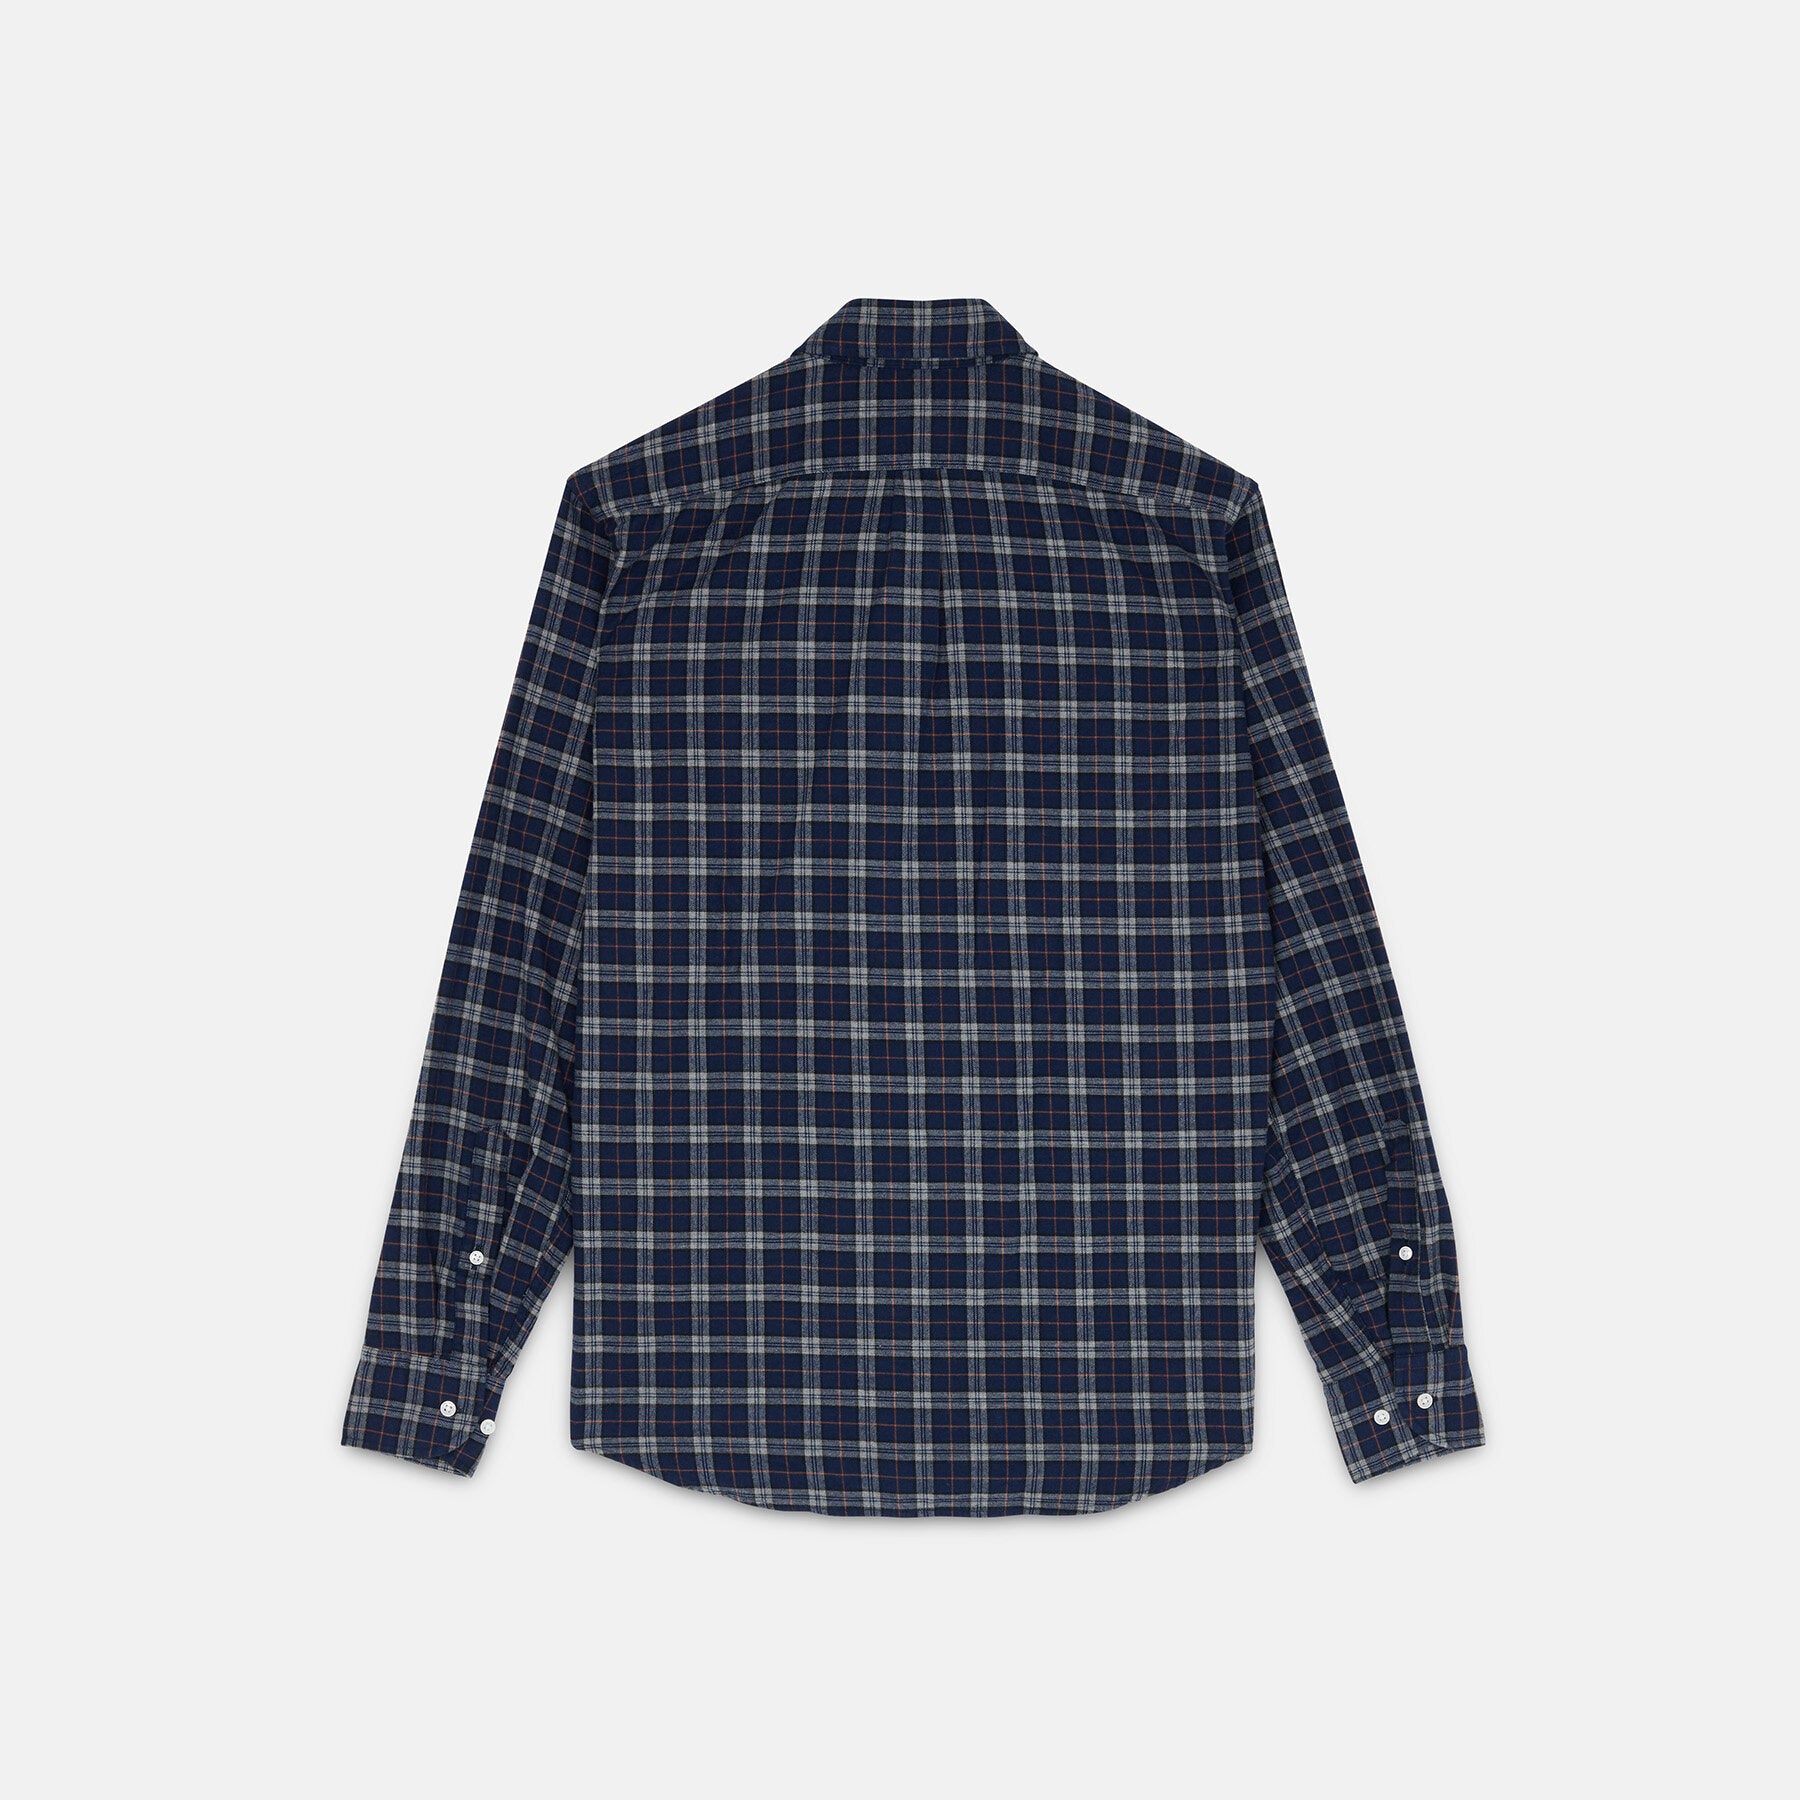 Bradford flannel check shirt